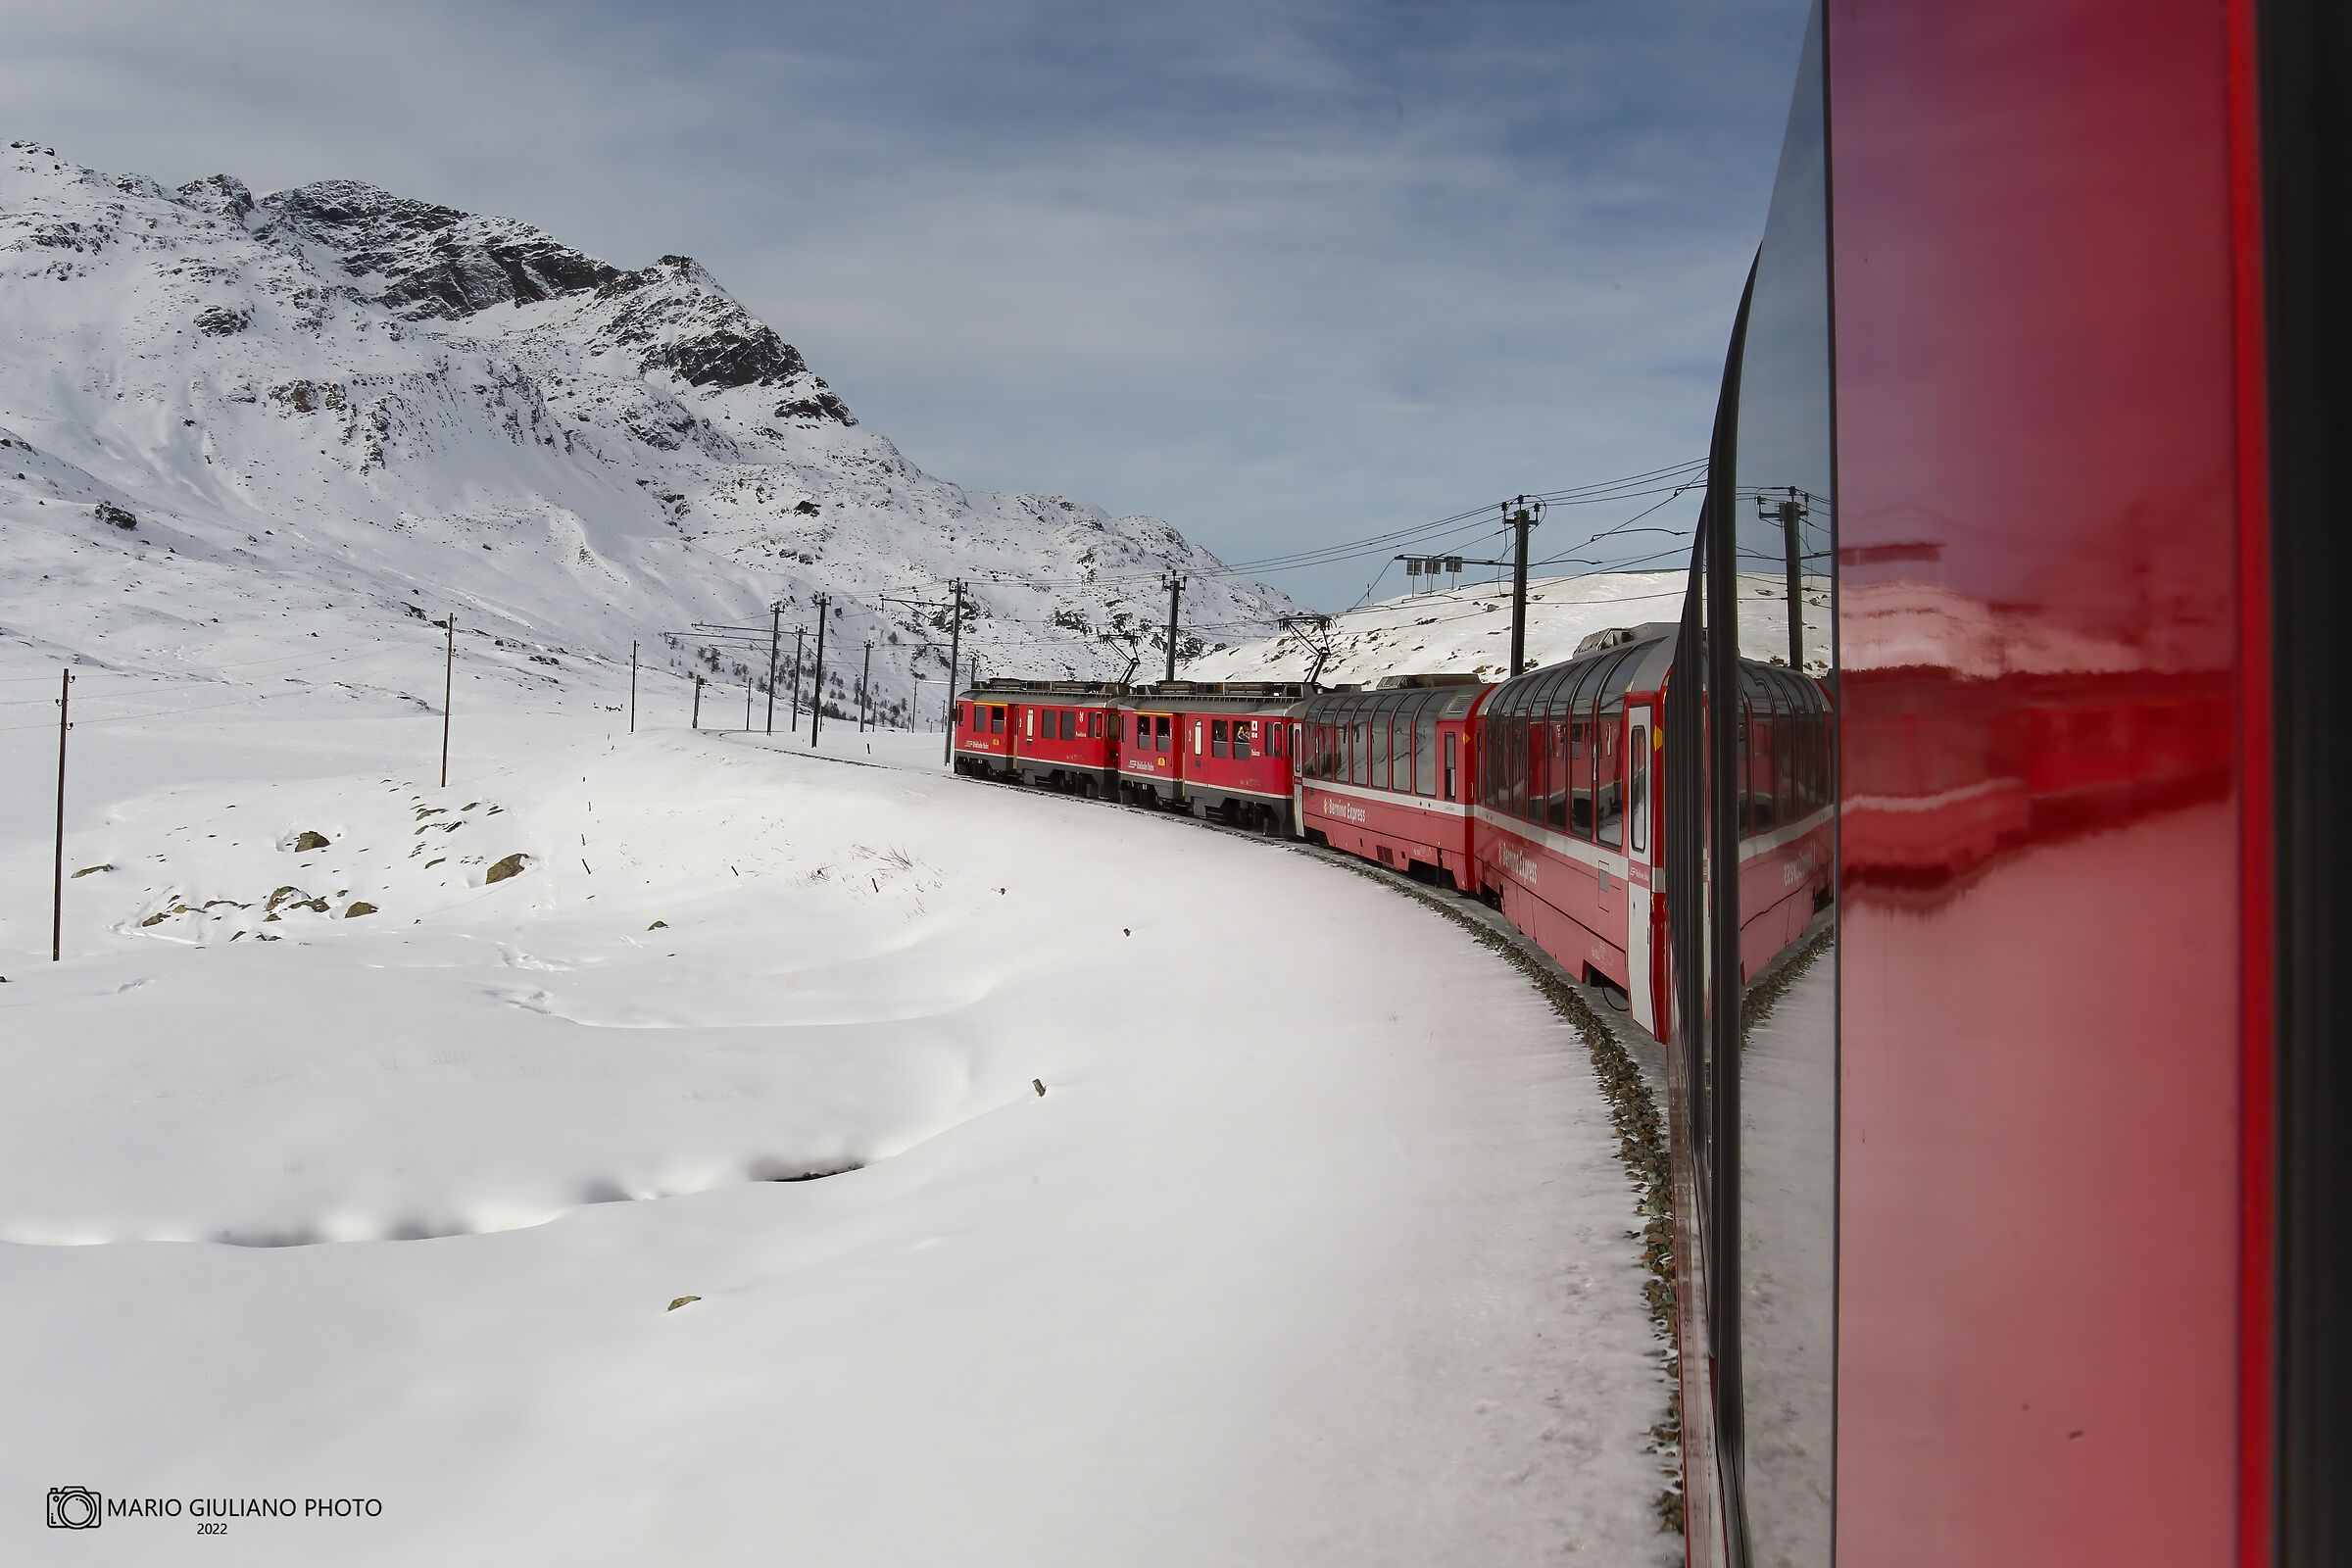 The Bernina red train...